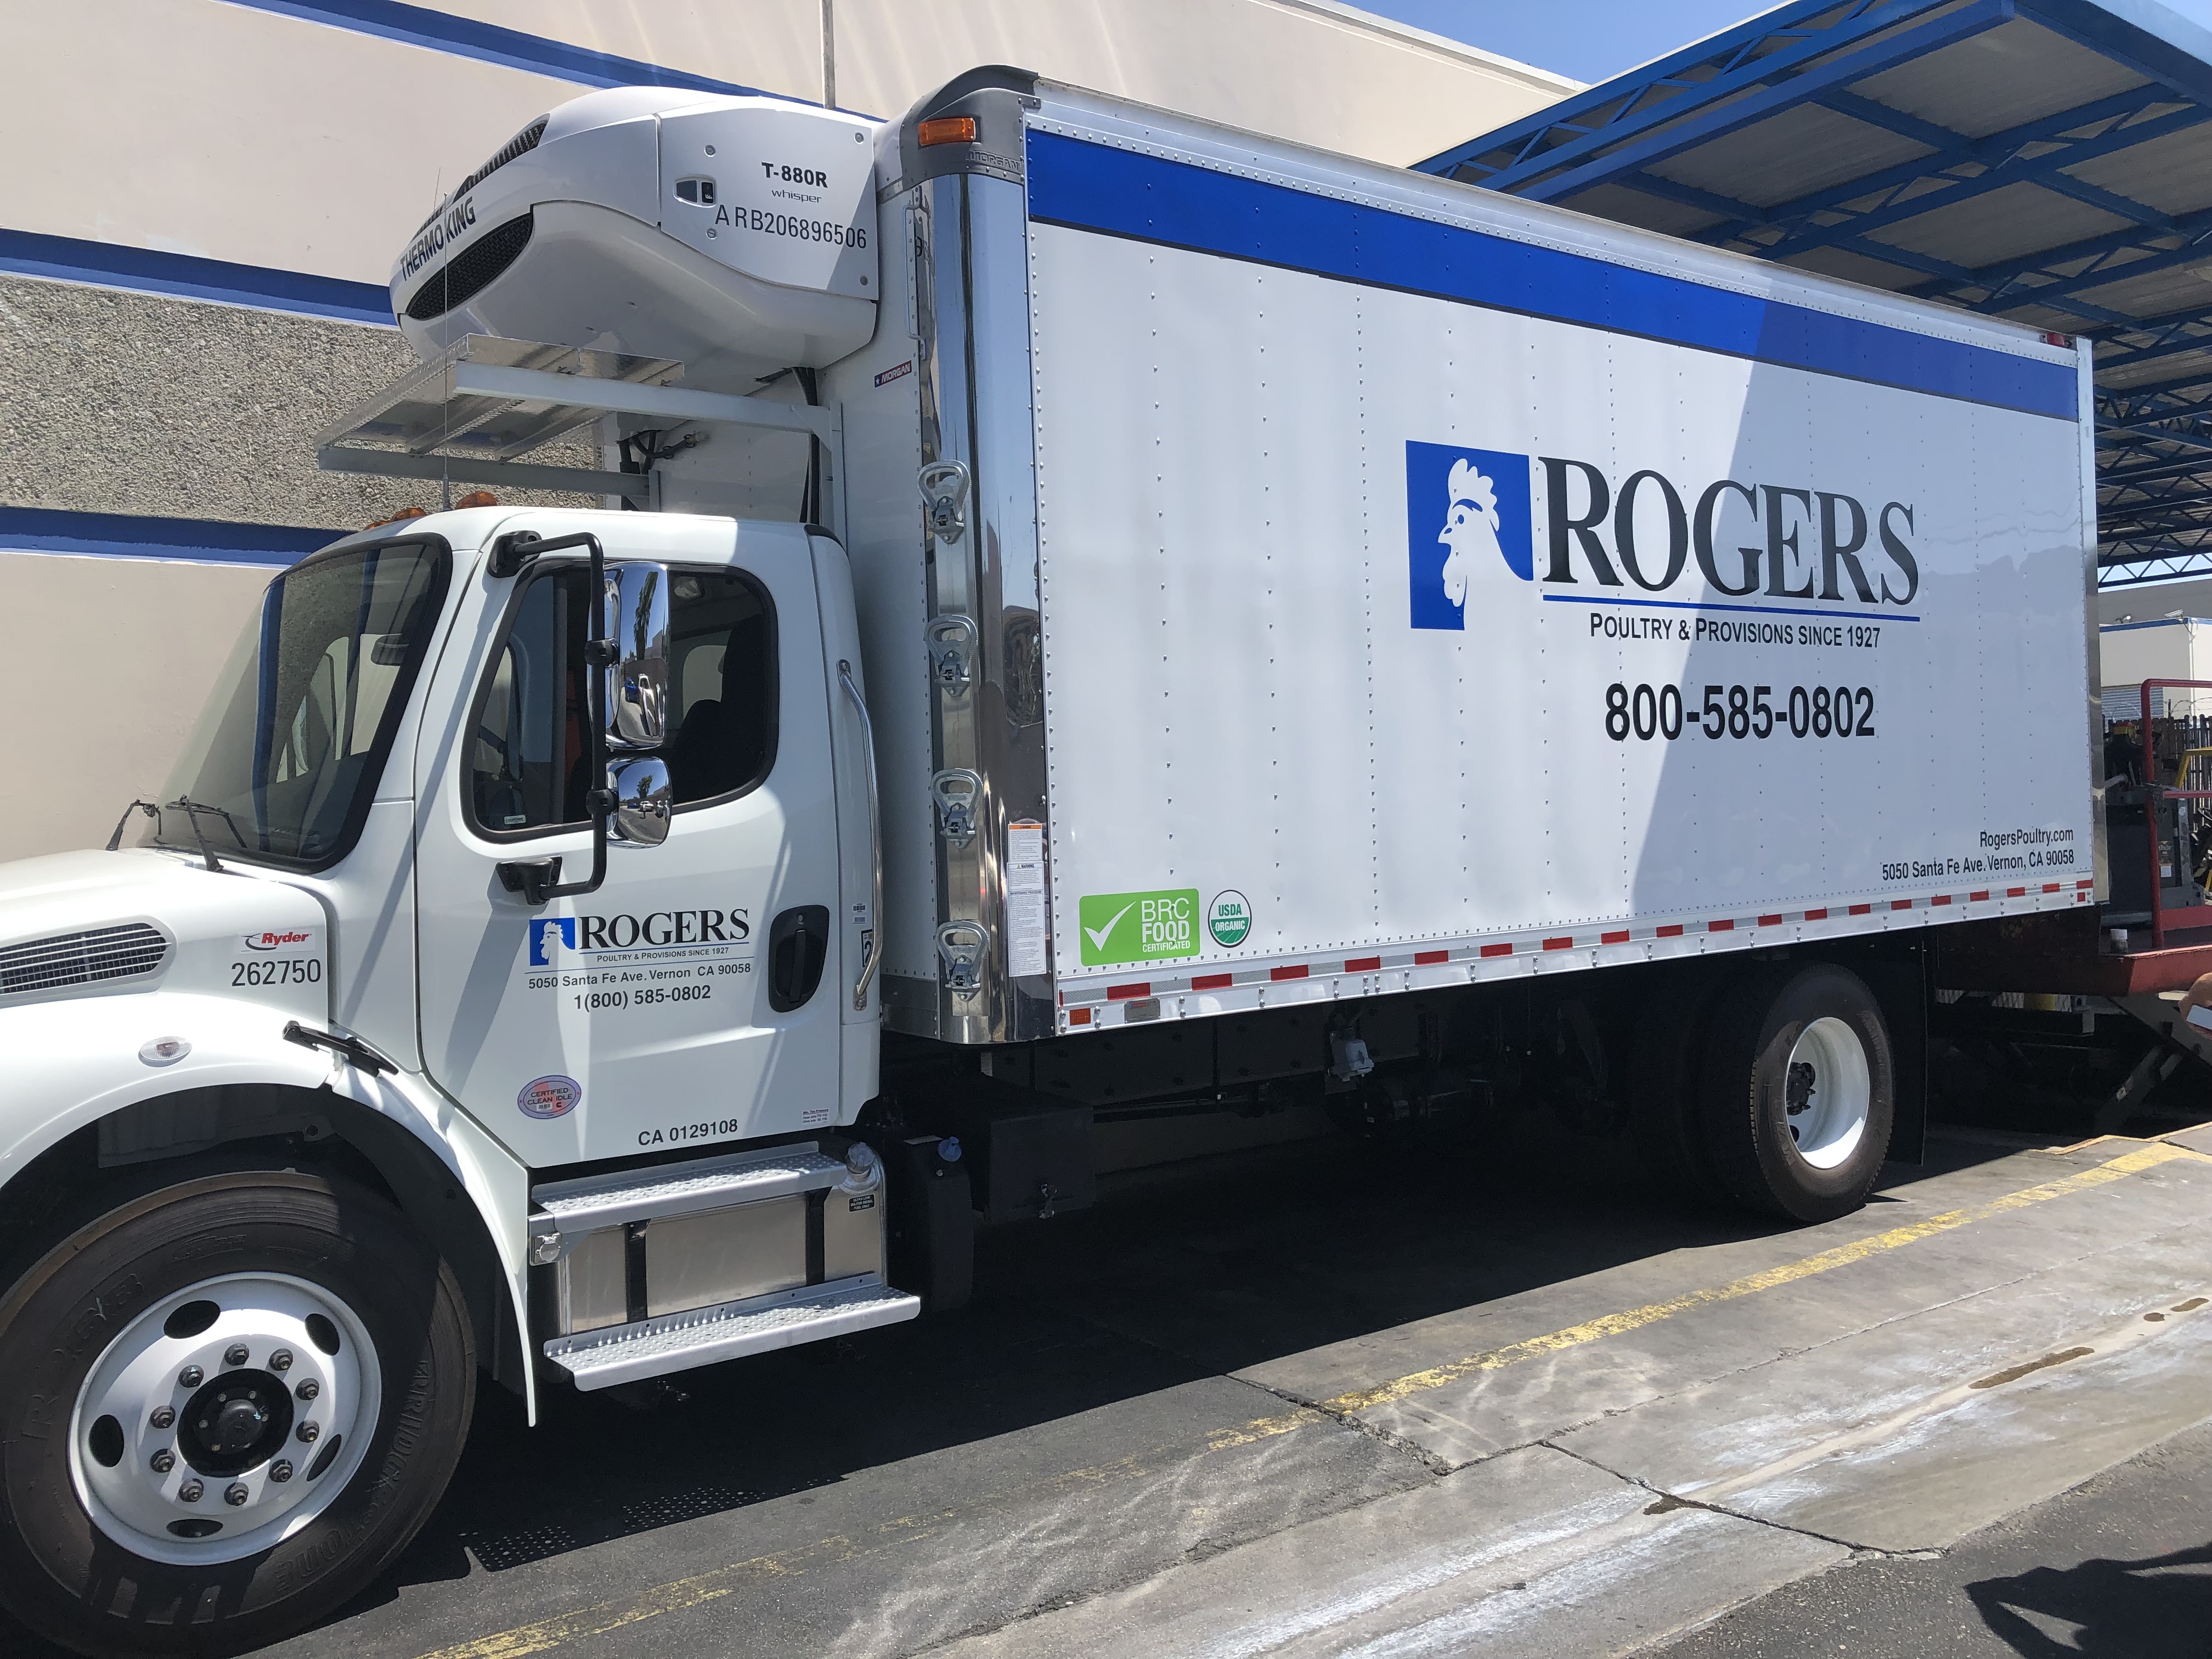 Rogers New Truck